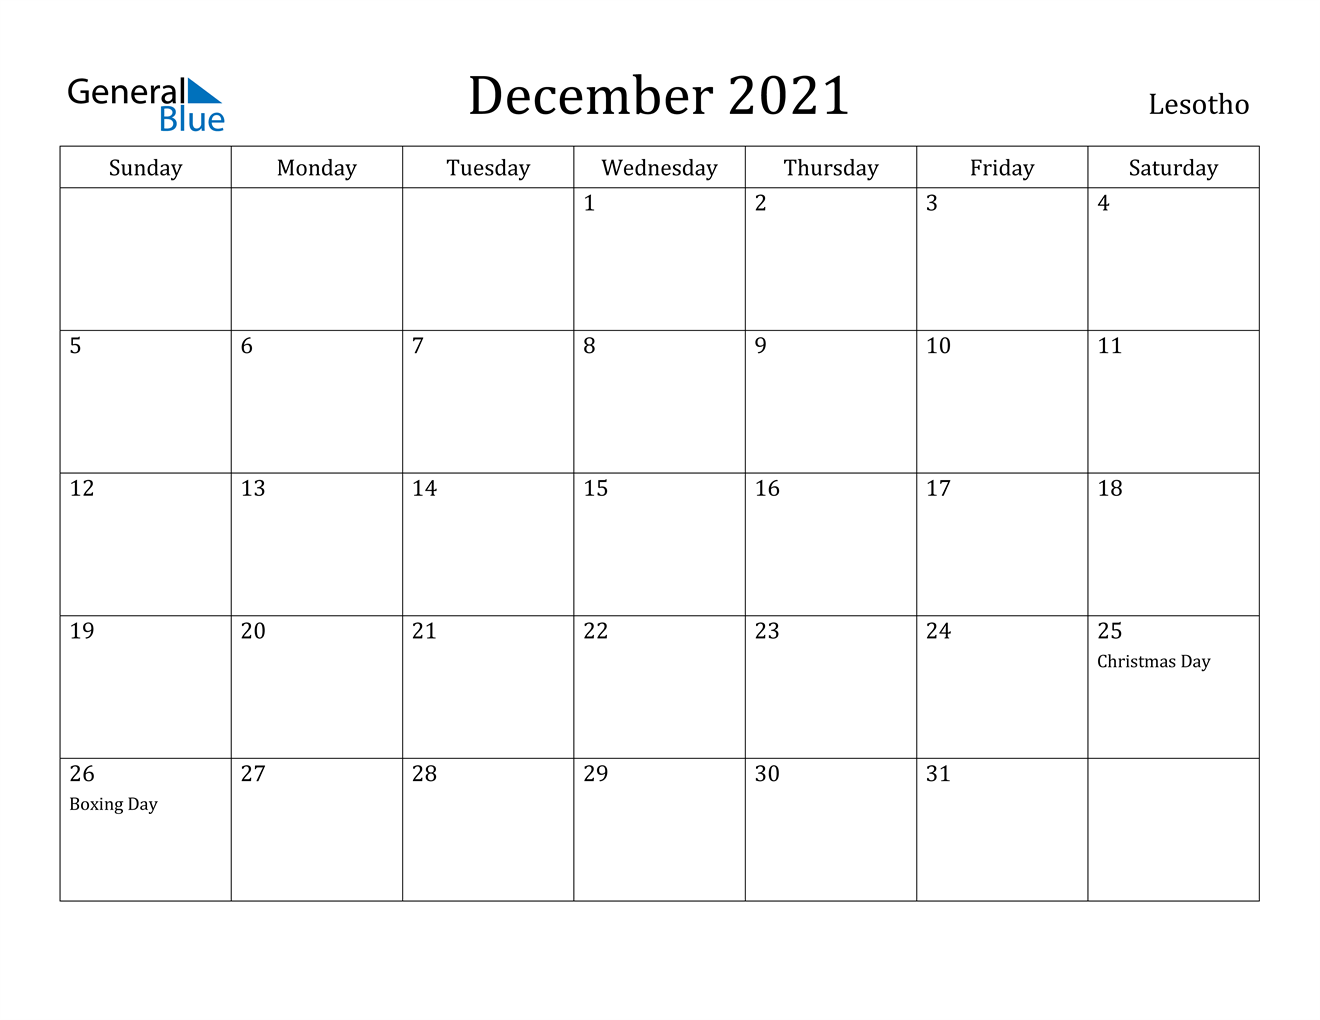 December 2021 Calendar - Lesotho